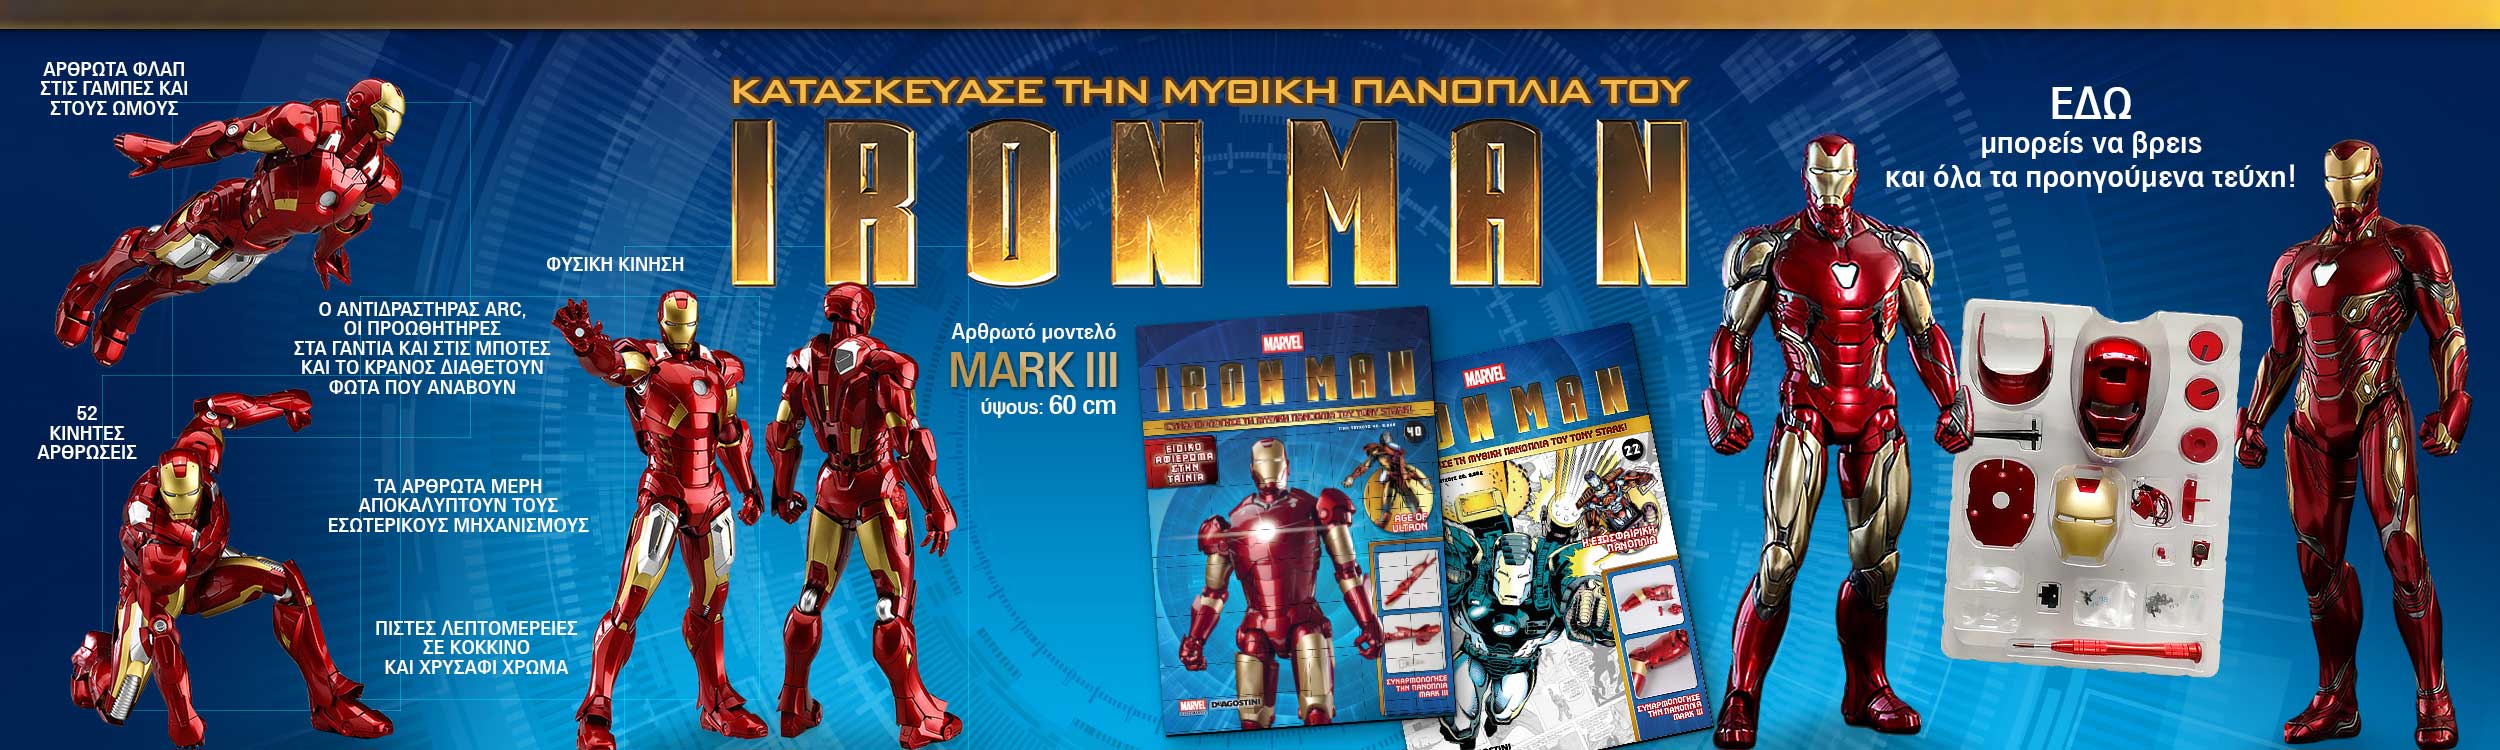 Iron man banner x